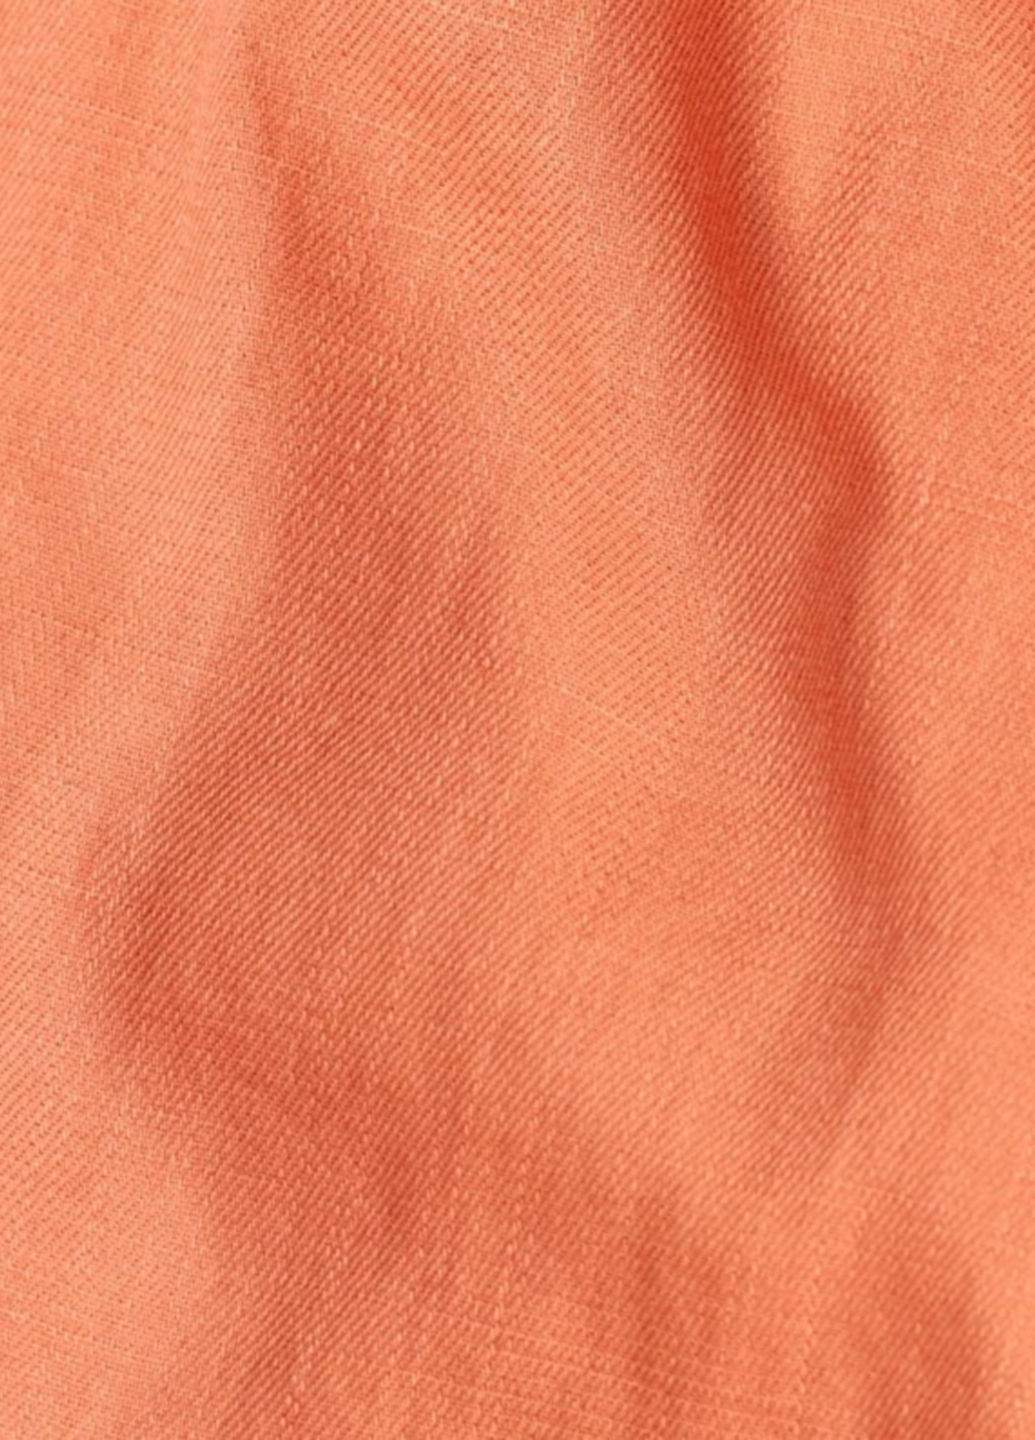 Комбинезон G-Star комбинезон-брюки однотонный оранжевый кэжуал хлопок